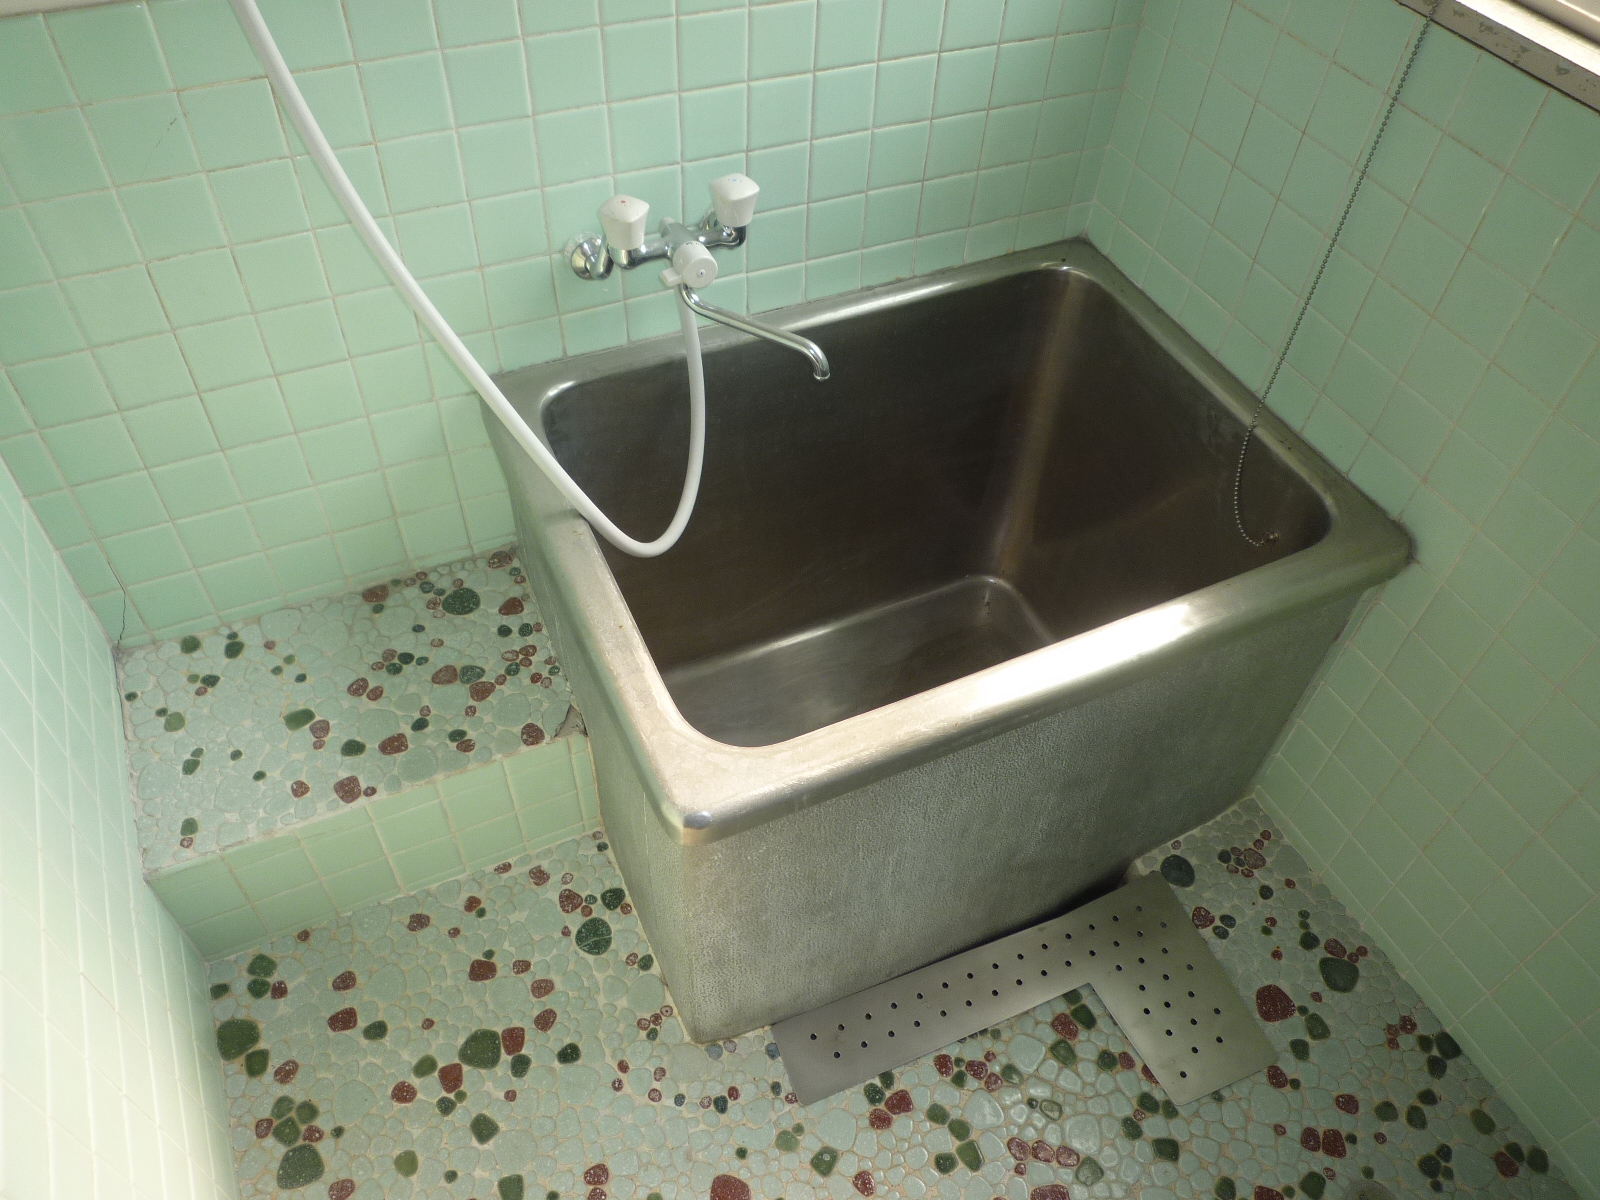 Bath. It is bathroom of nostalgic atmosphere